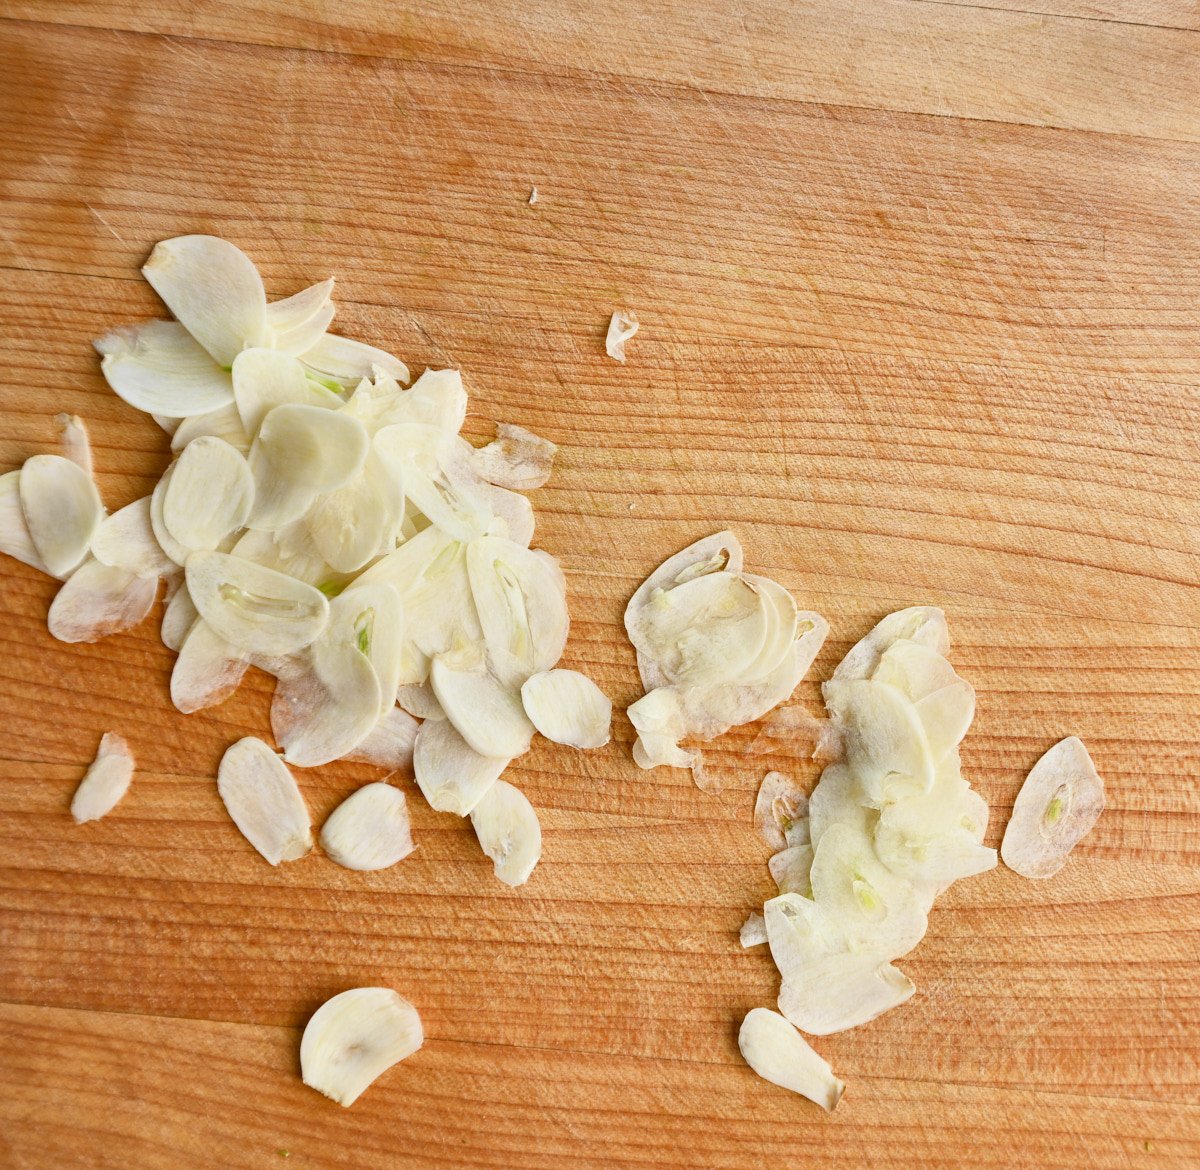 thinly sliced garlic on a wooden cutting board